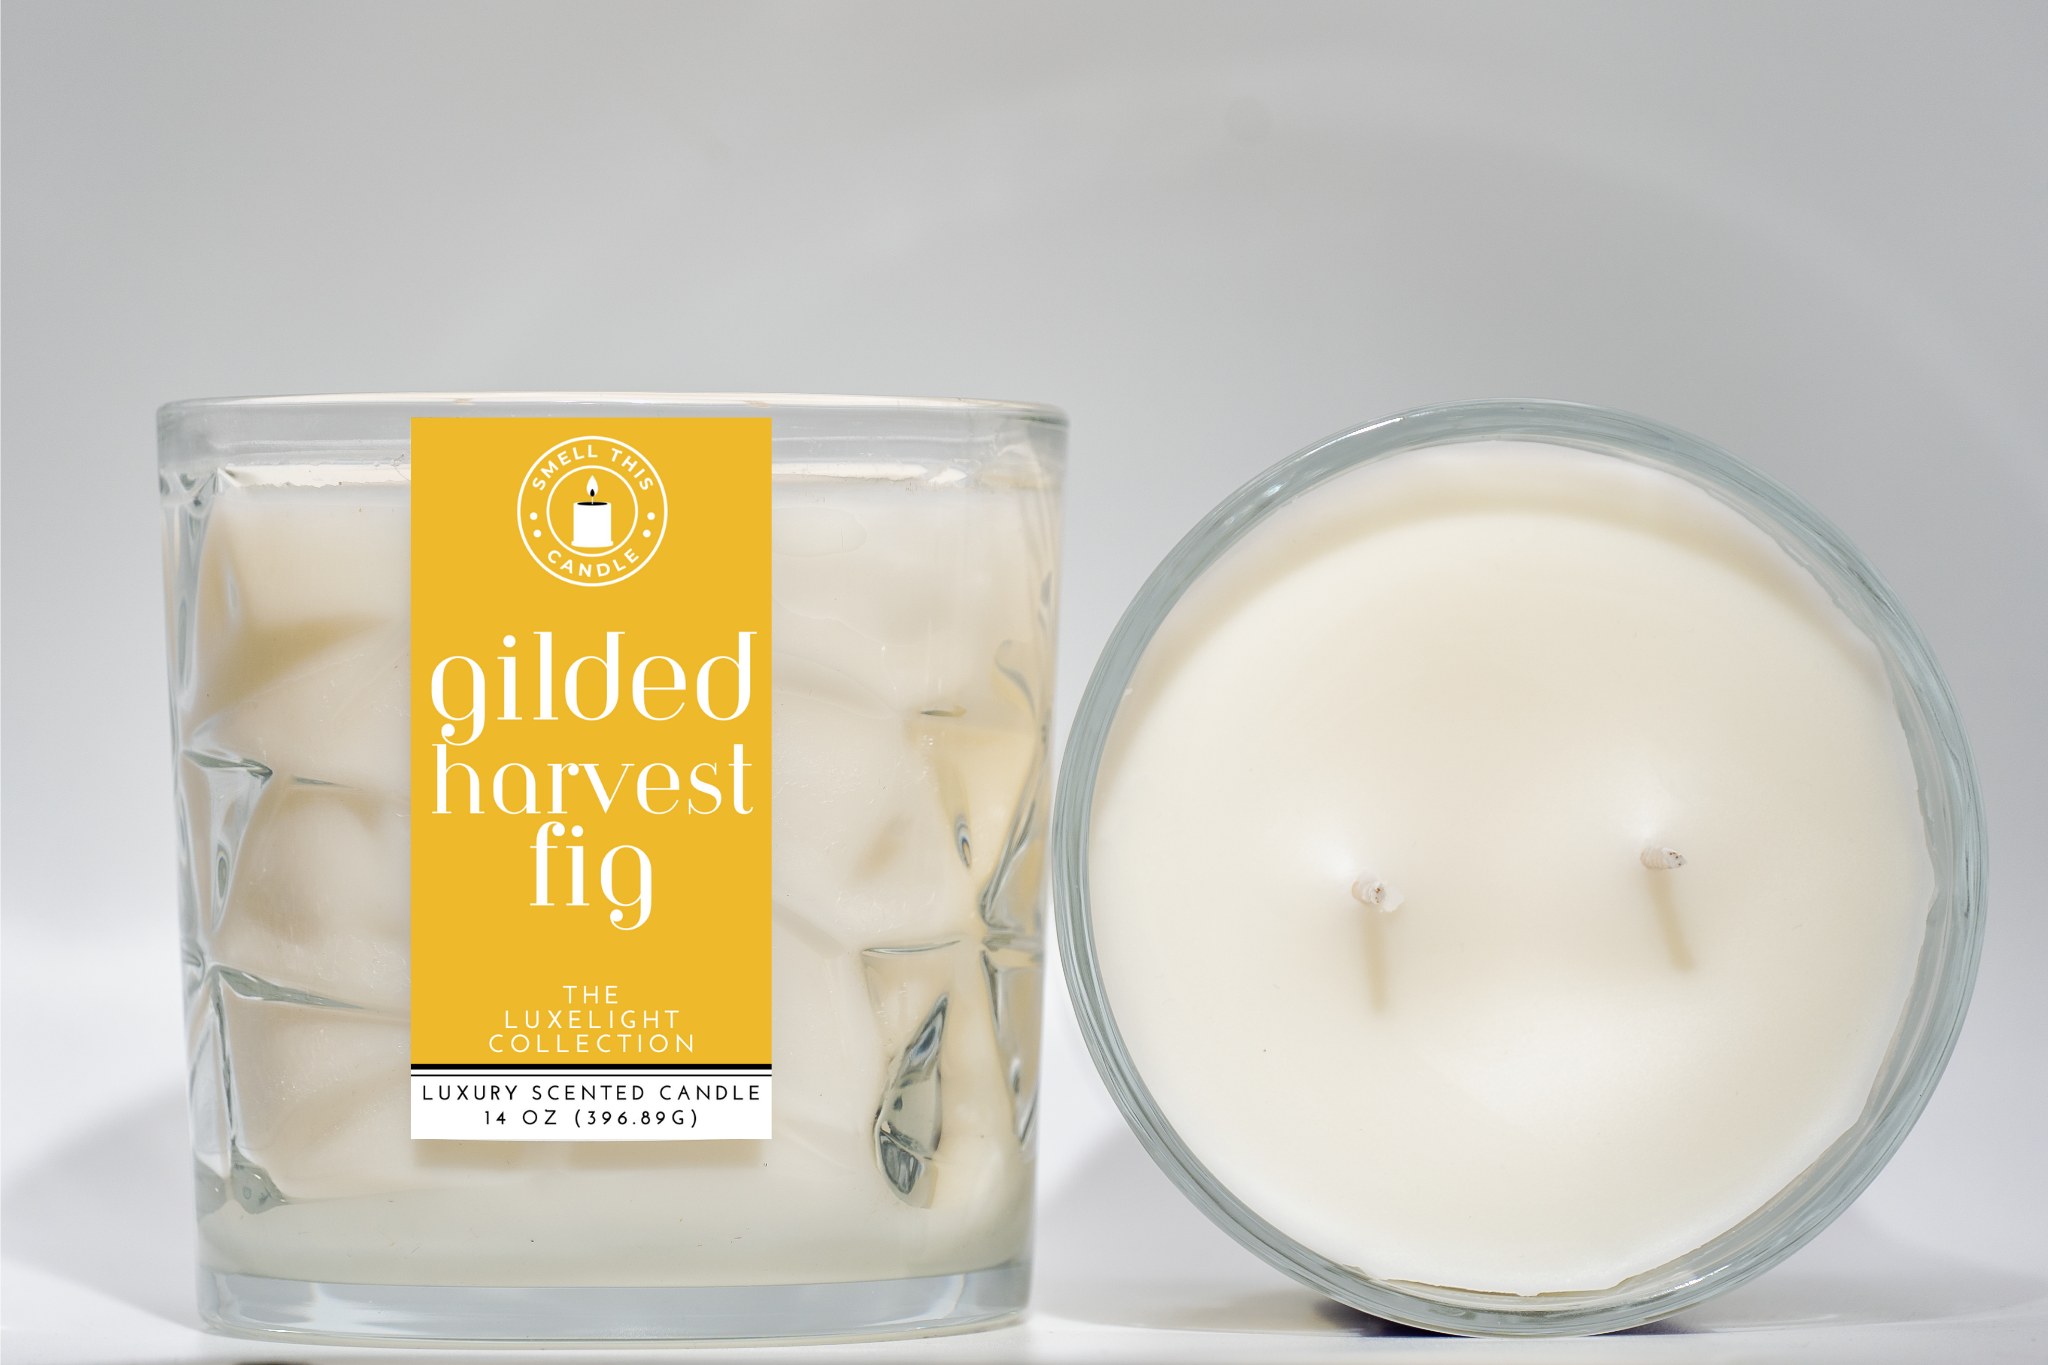 Gilded Harvest Fig candle